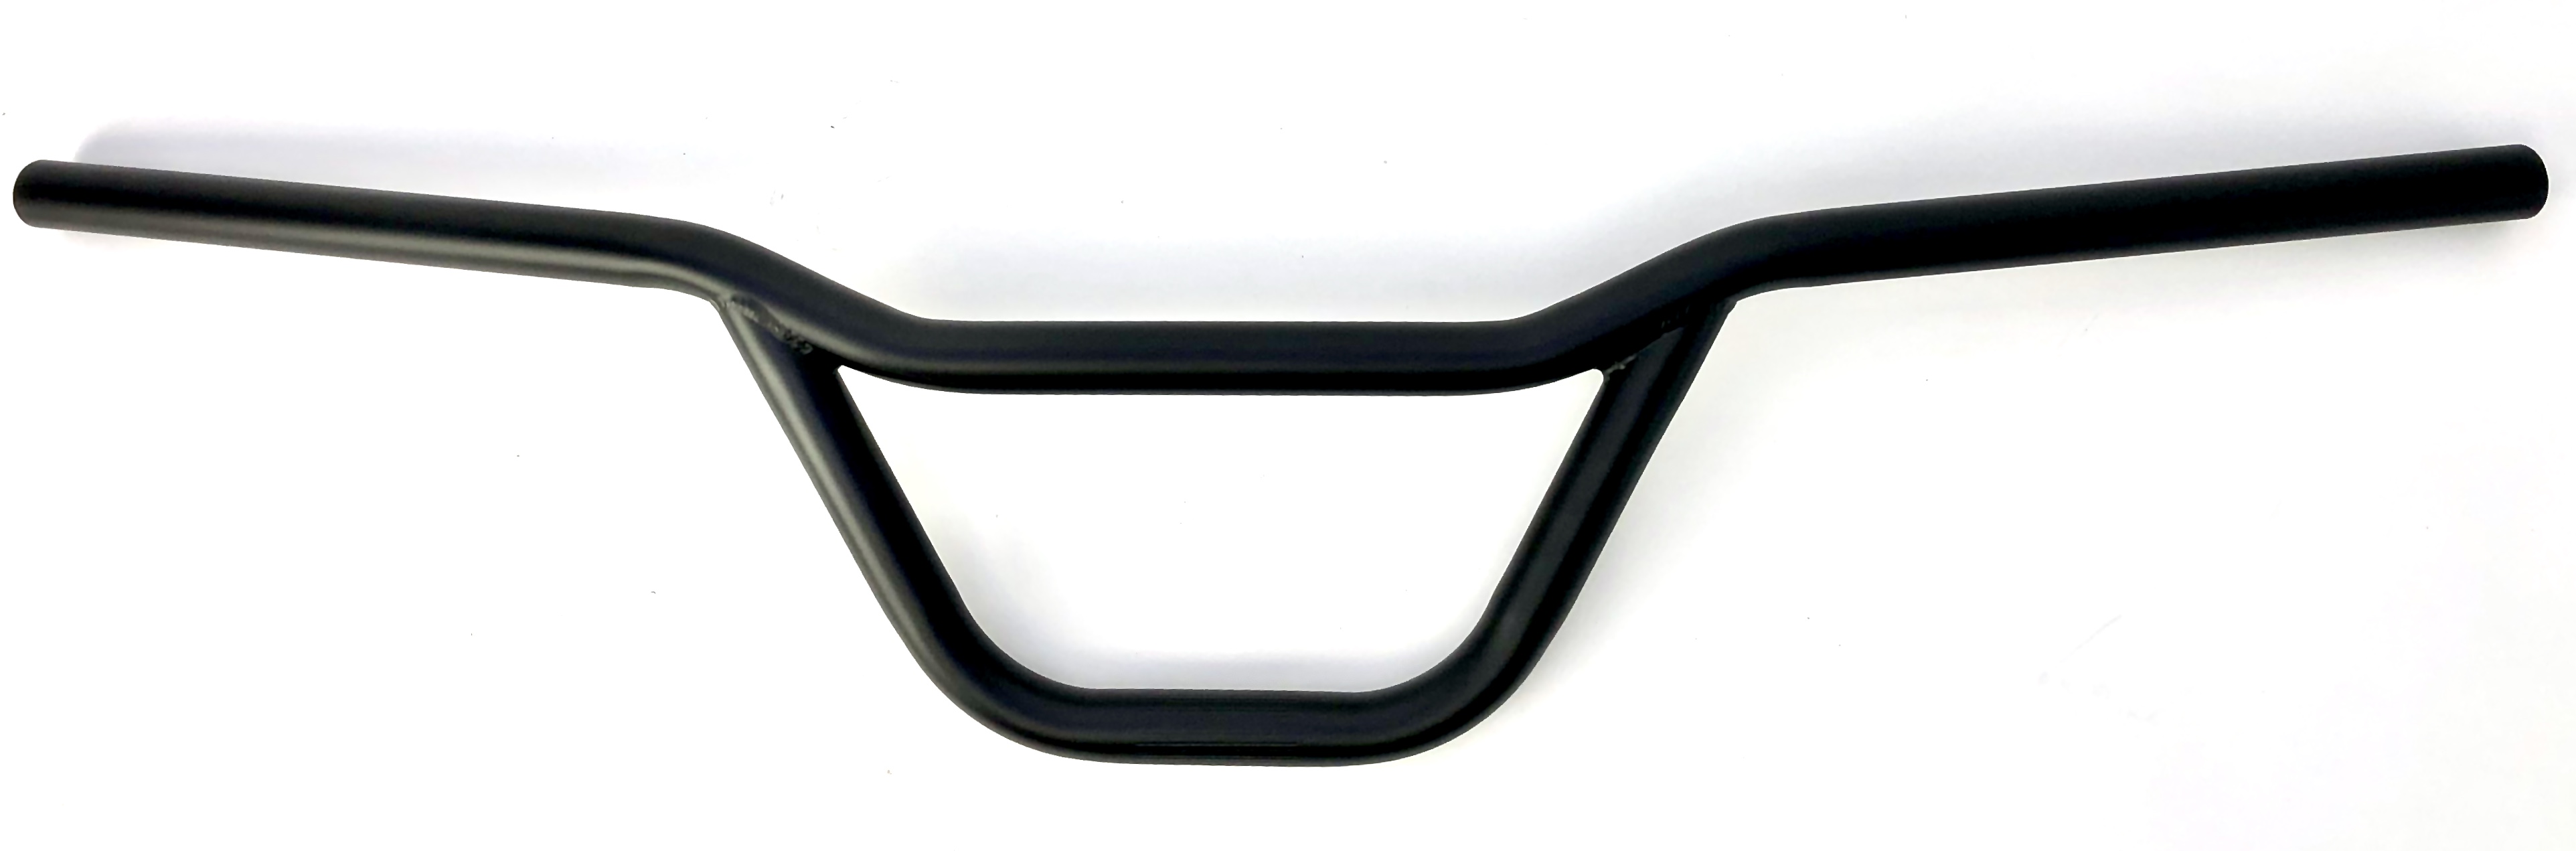 Flat Cross: manillar ancho y plano en forma de BMX negro mate